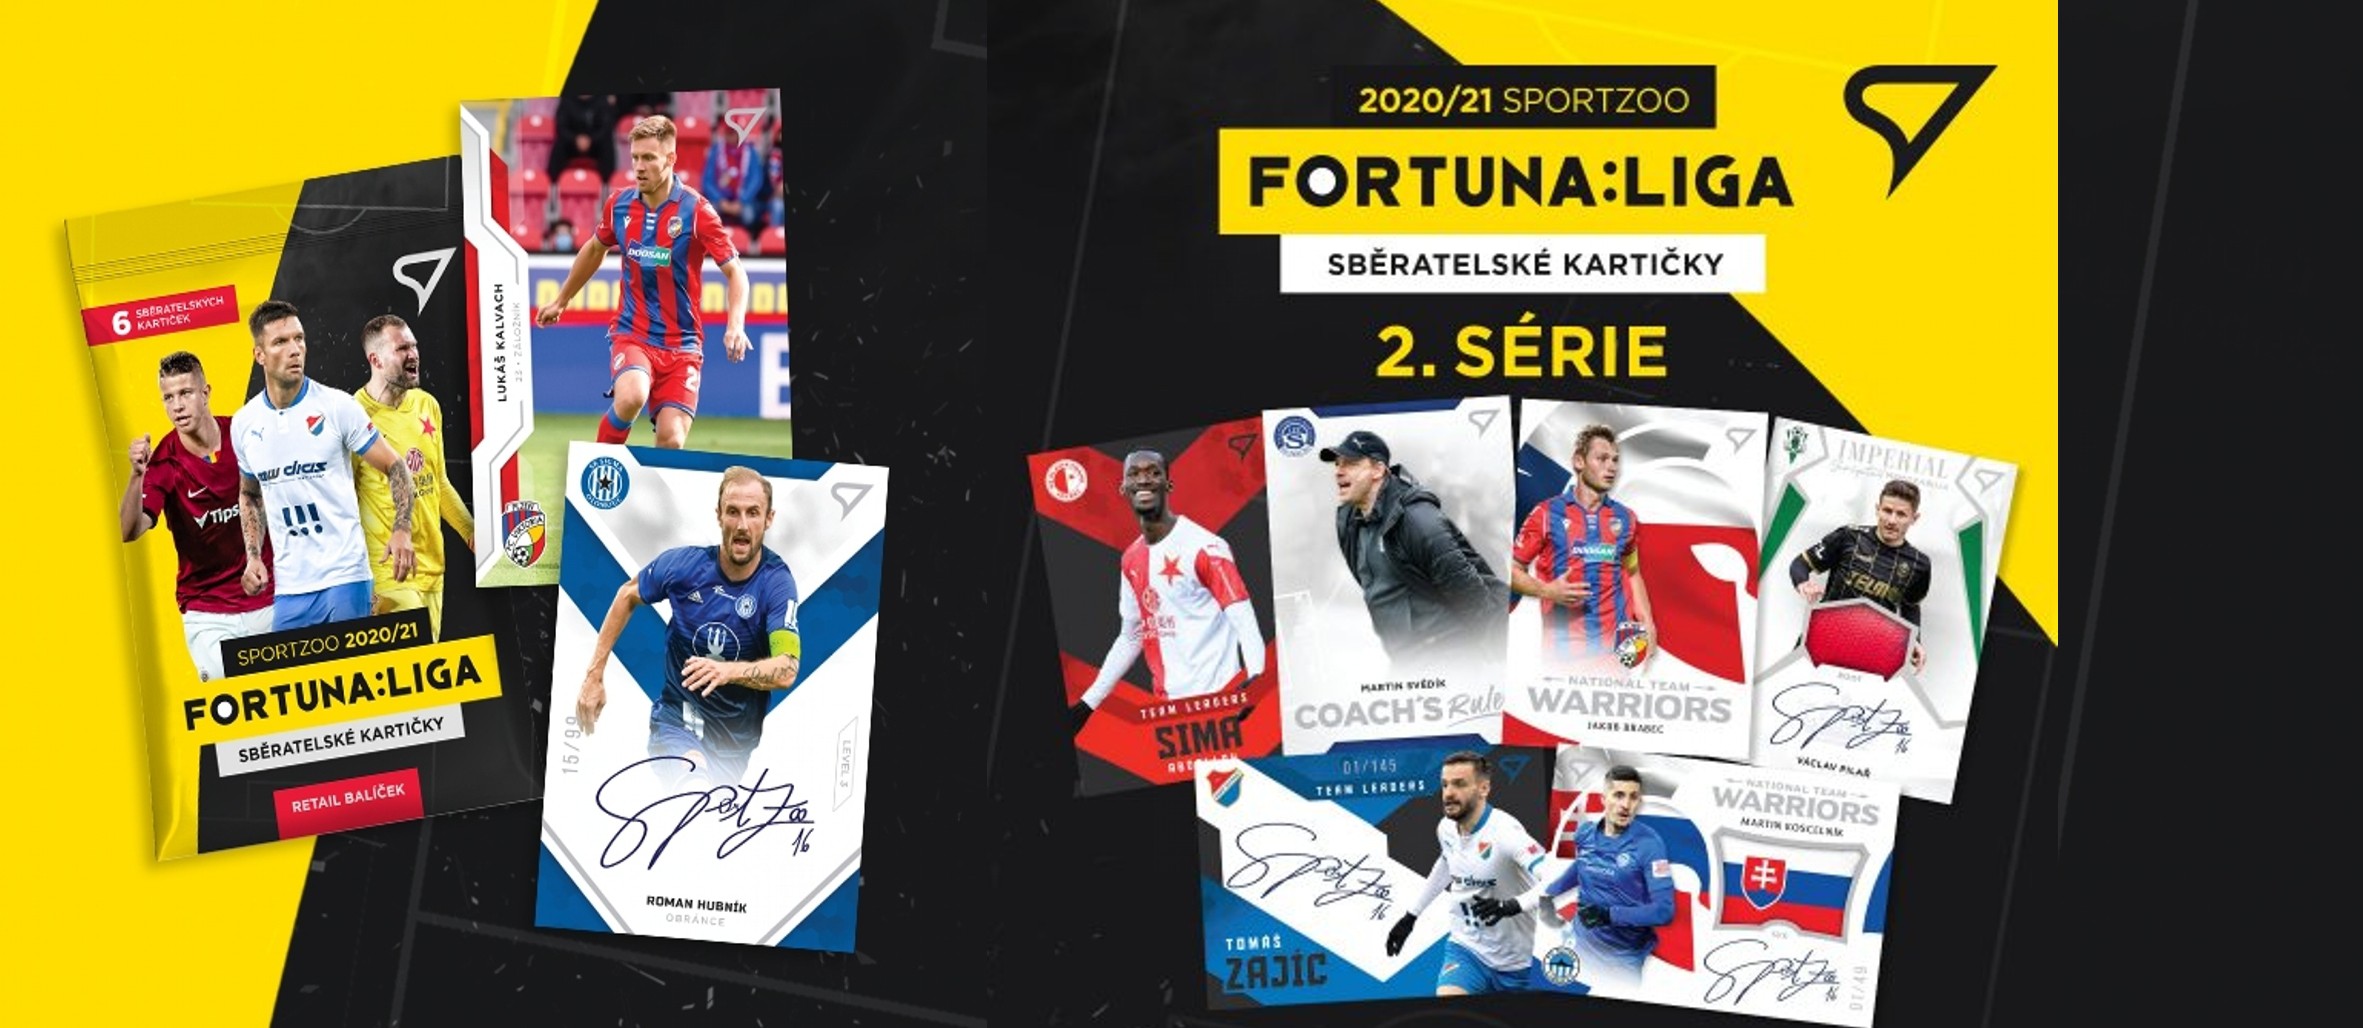 Fortuna Liga 2020-21 karty SportZoo série 2